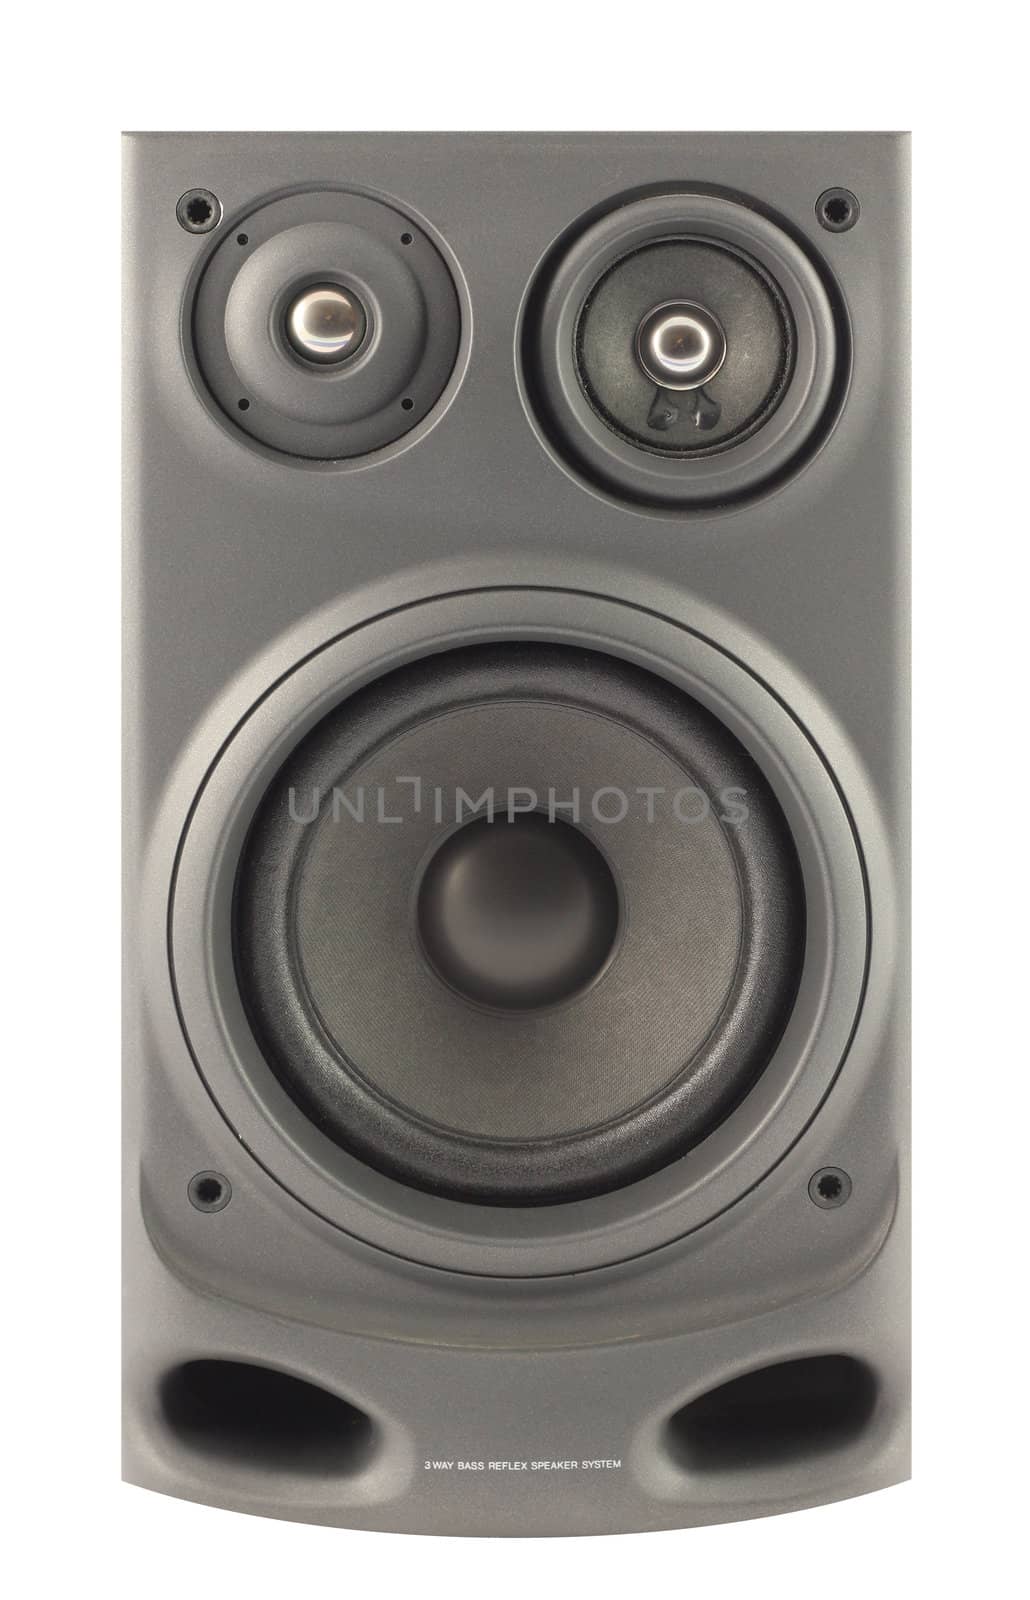 Loud speaker isolated in white